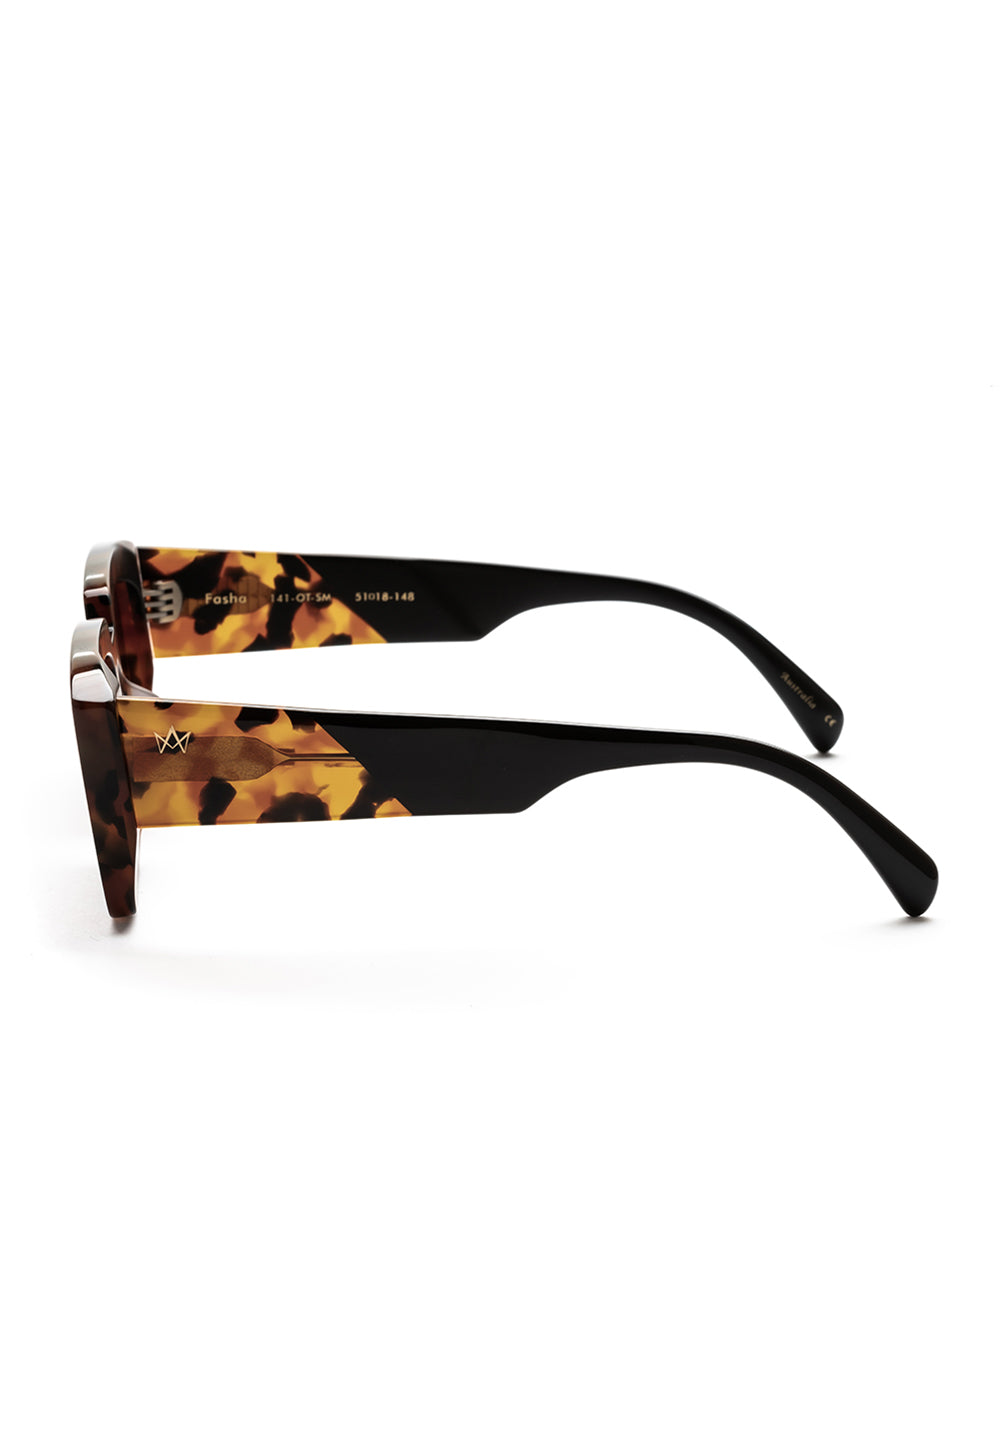 Fasha Polarised Sunglasses - Old School Tort sold by Angel Divine